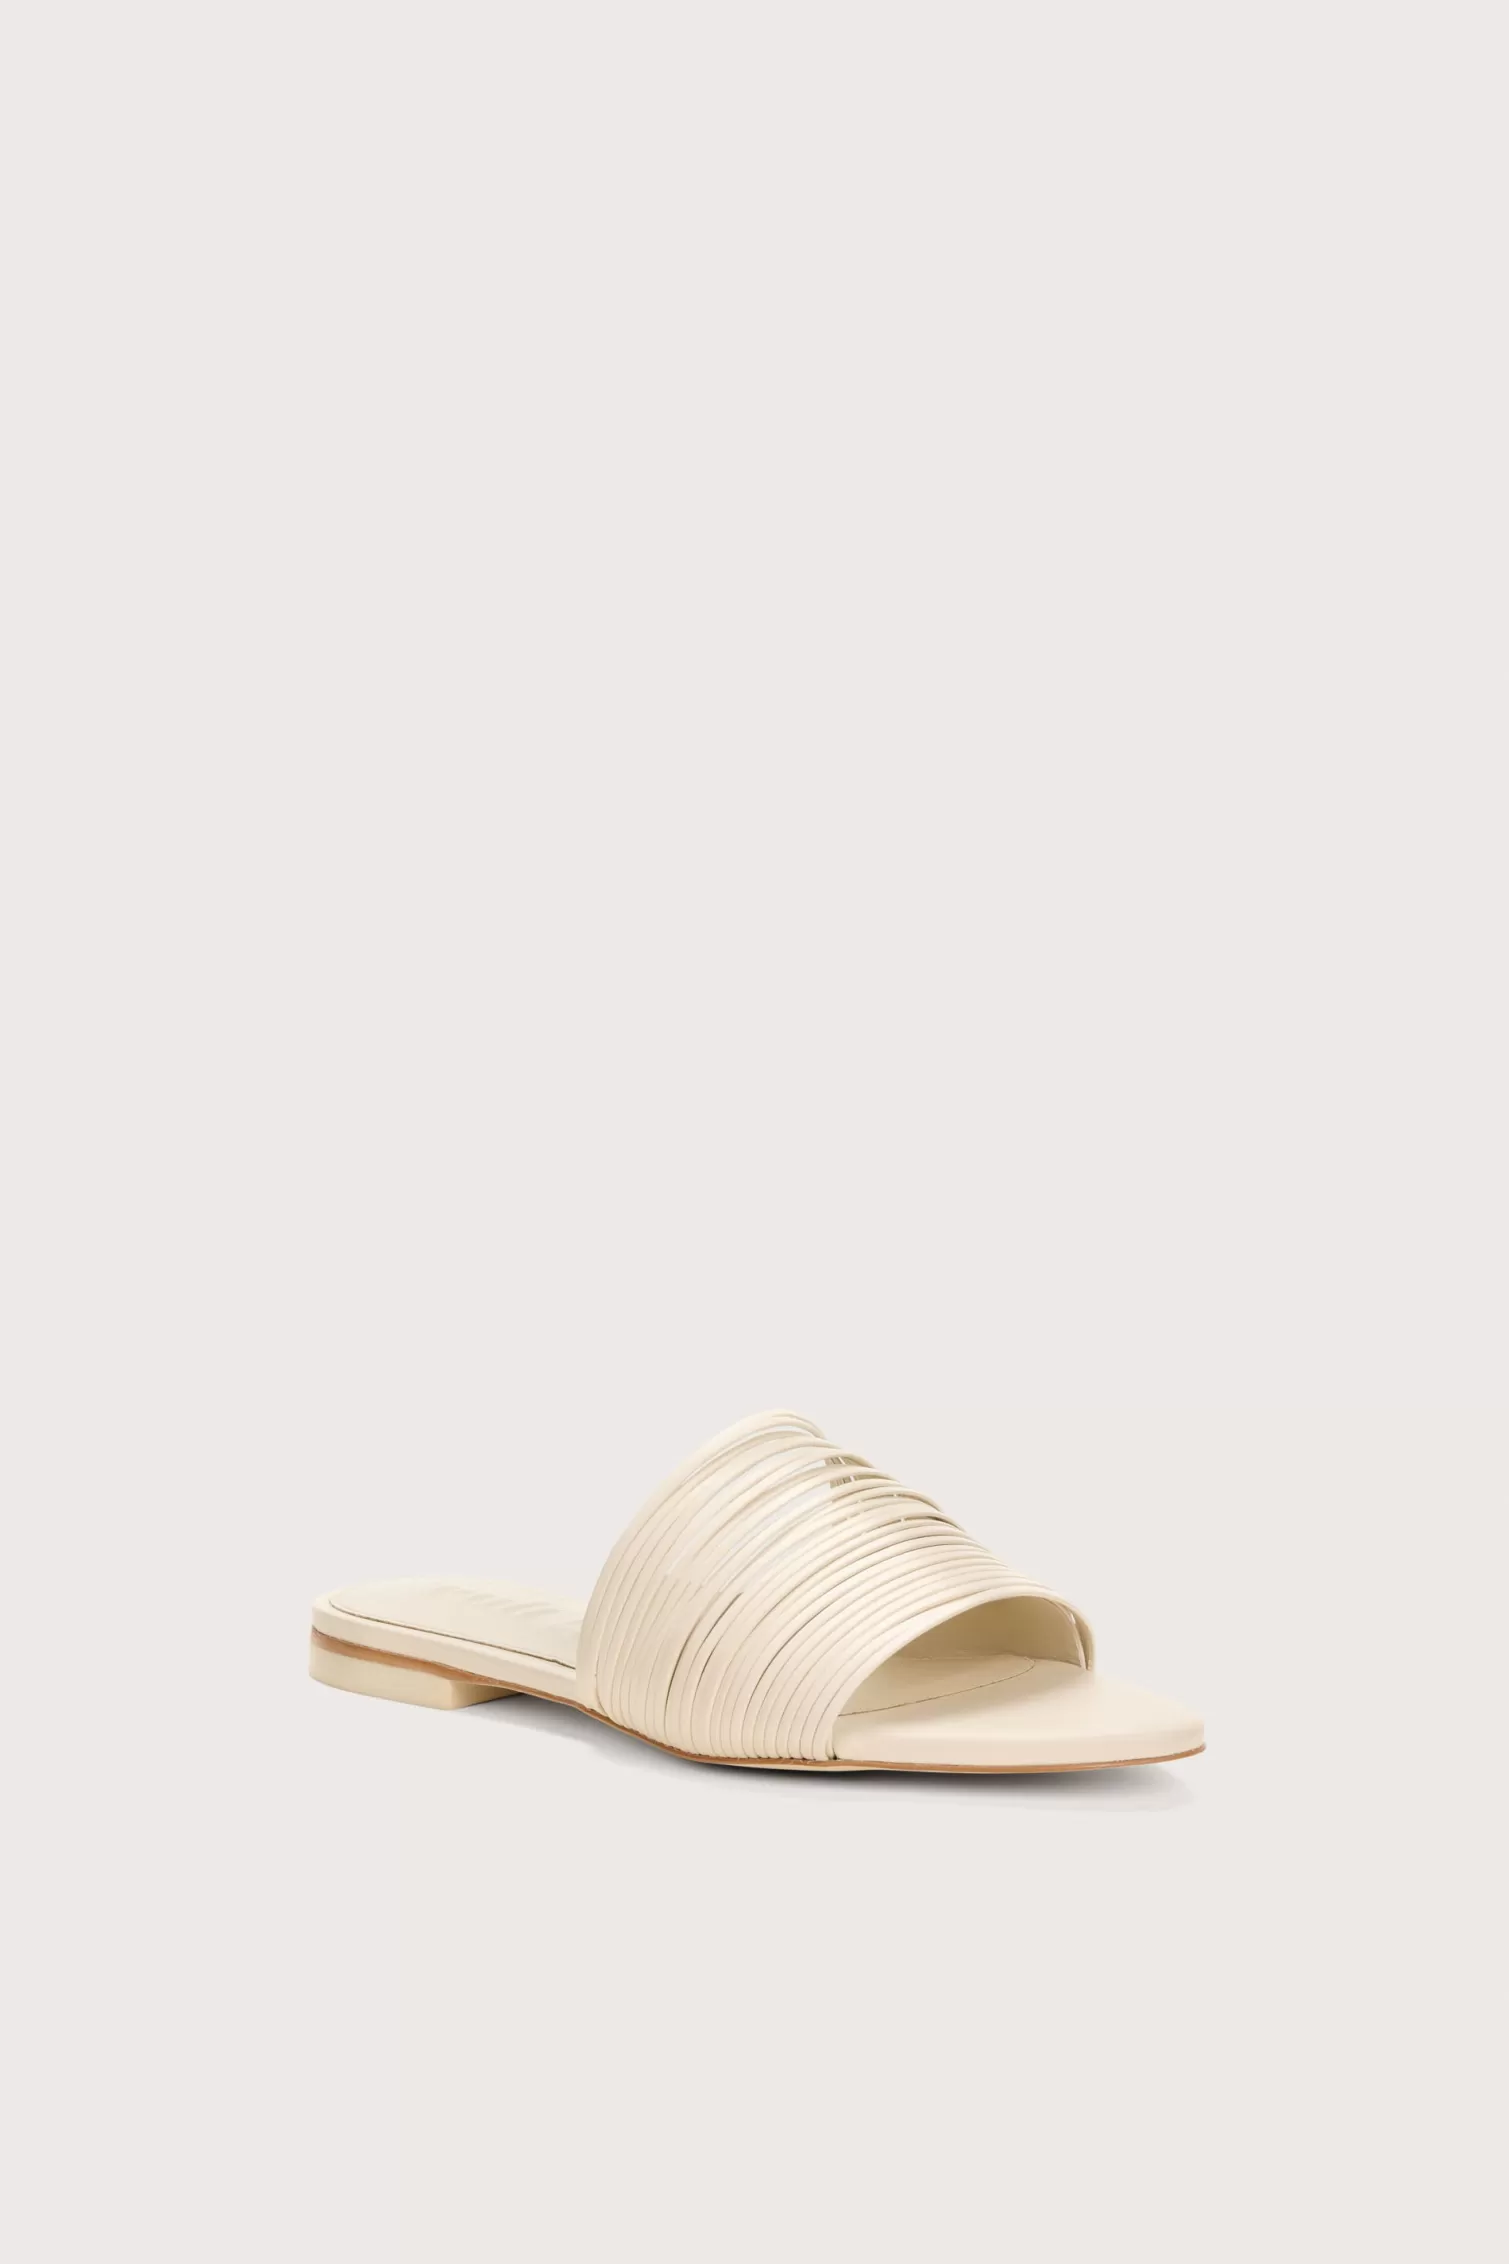 New MIA SANDAL - Flats | Sandals